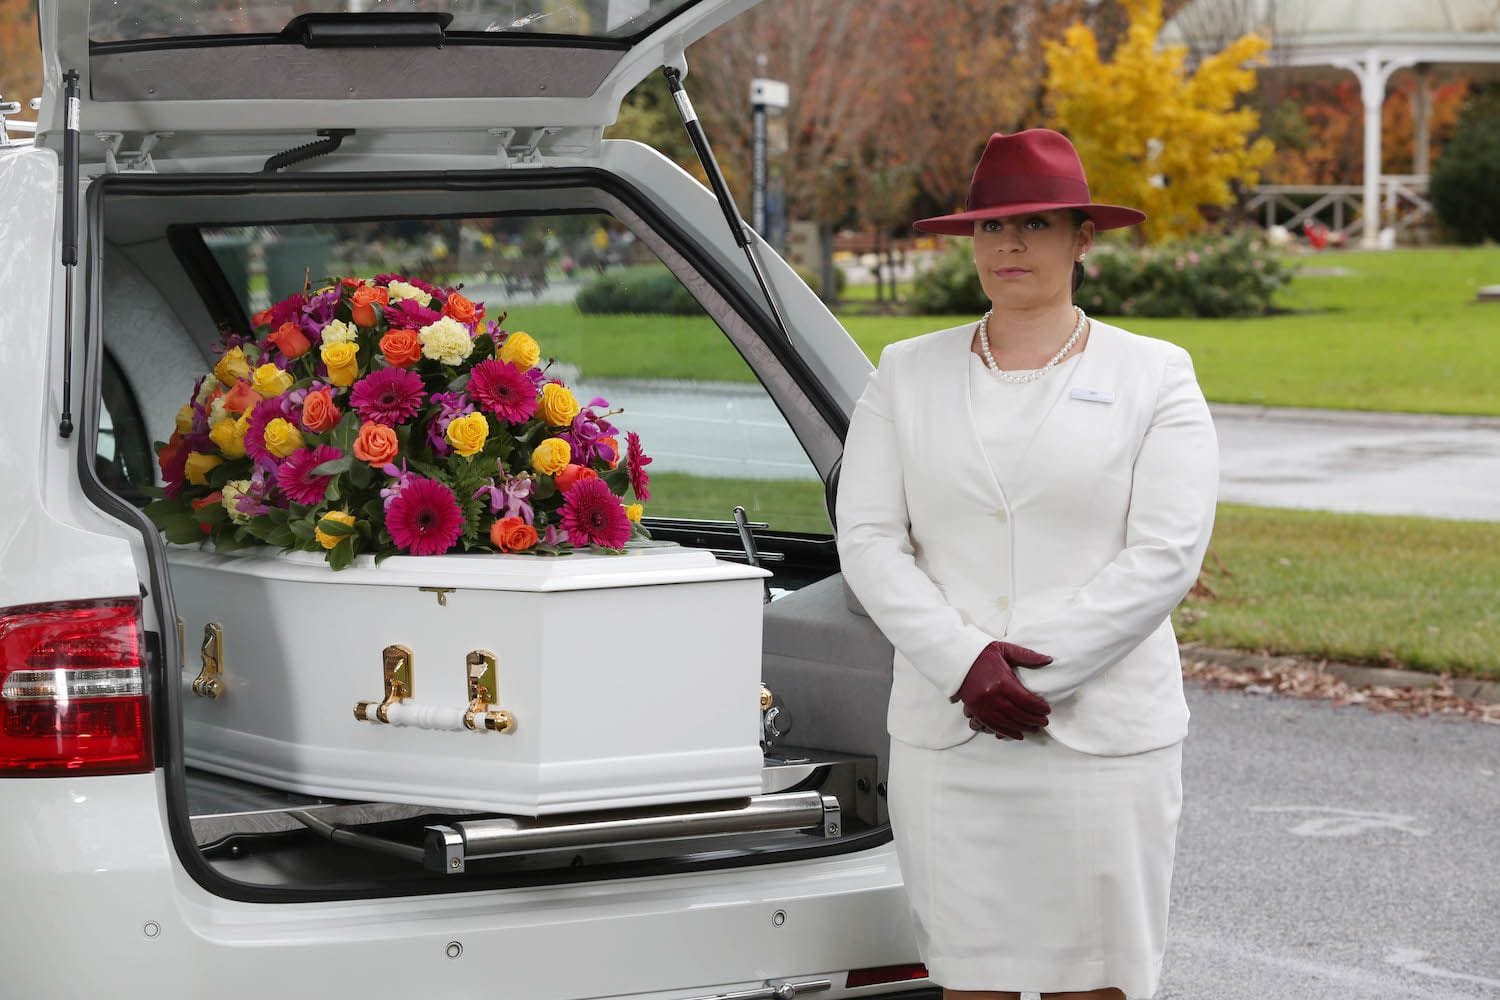 Investment group TPG pulls $1.8 billion bid for funeral operator InvoCare, shares slide